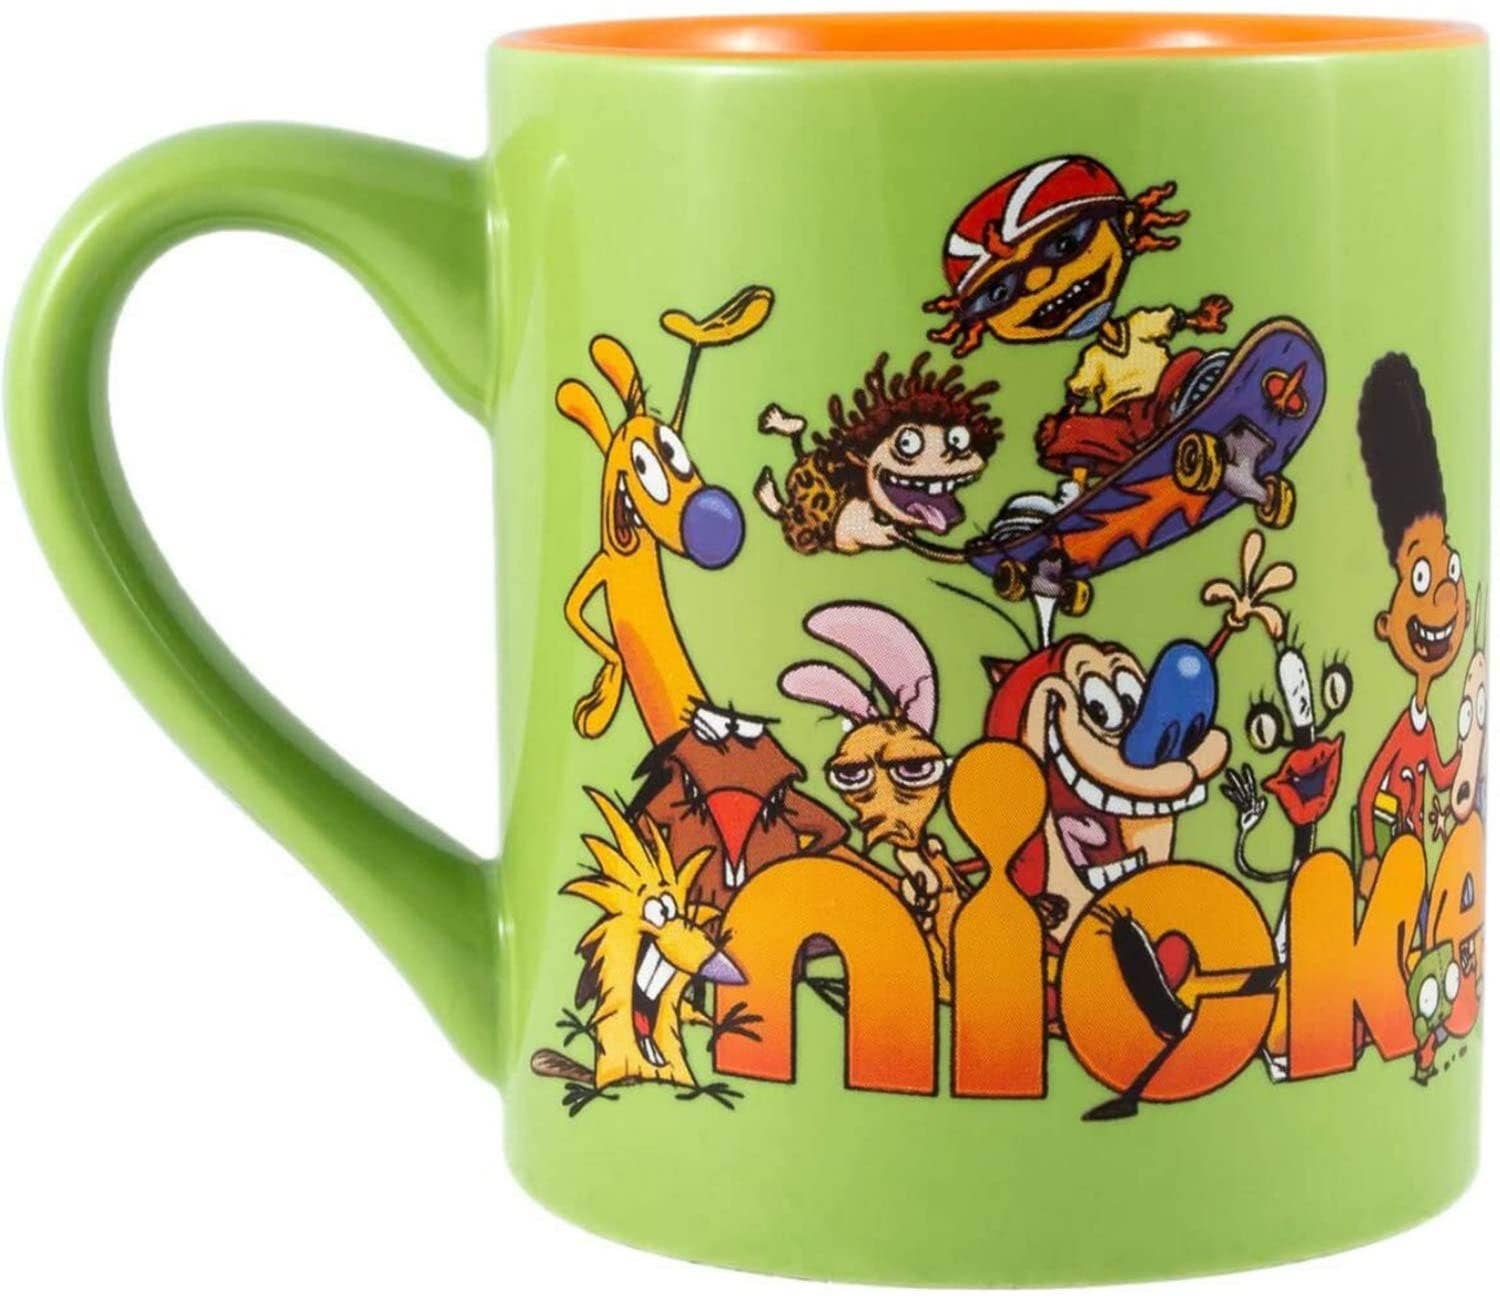 Nickelodeon 90s Logo and Characters 11oz Ceramic Mug